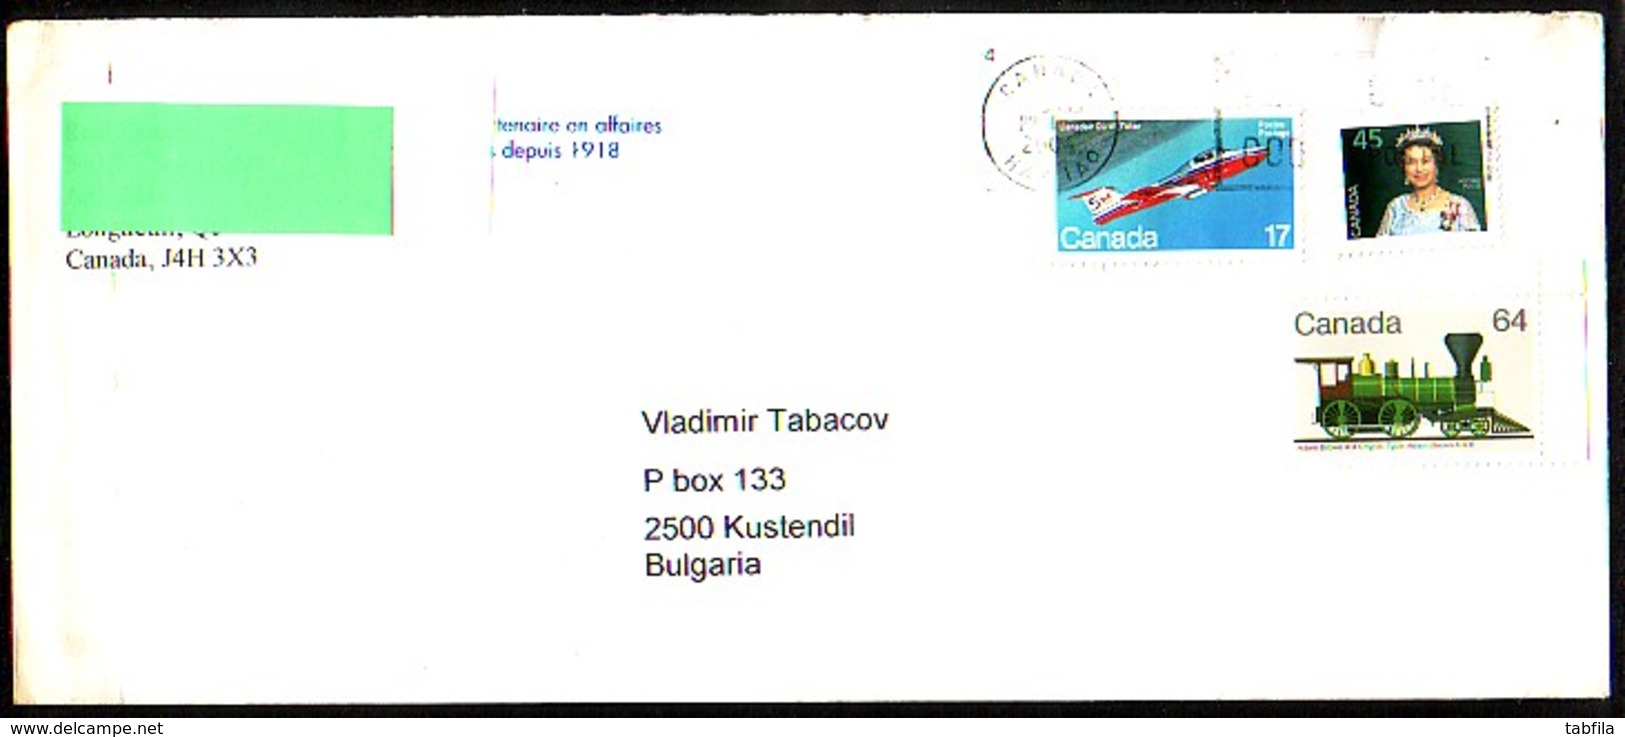 CANADA - 2004 - P.covert - Voyage Canada - Bulgaria - Enveloppes Commémoratives